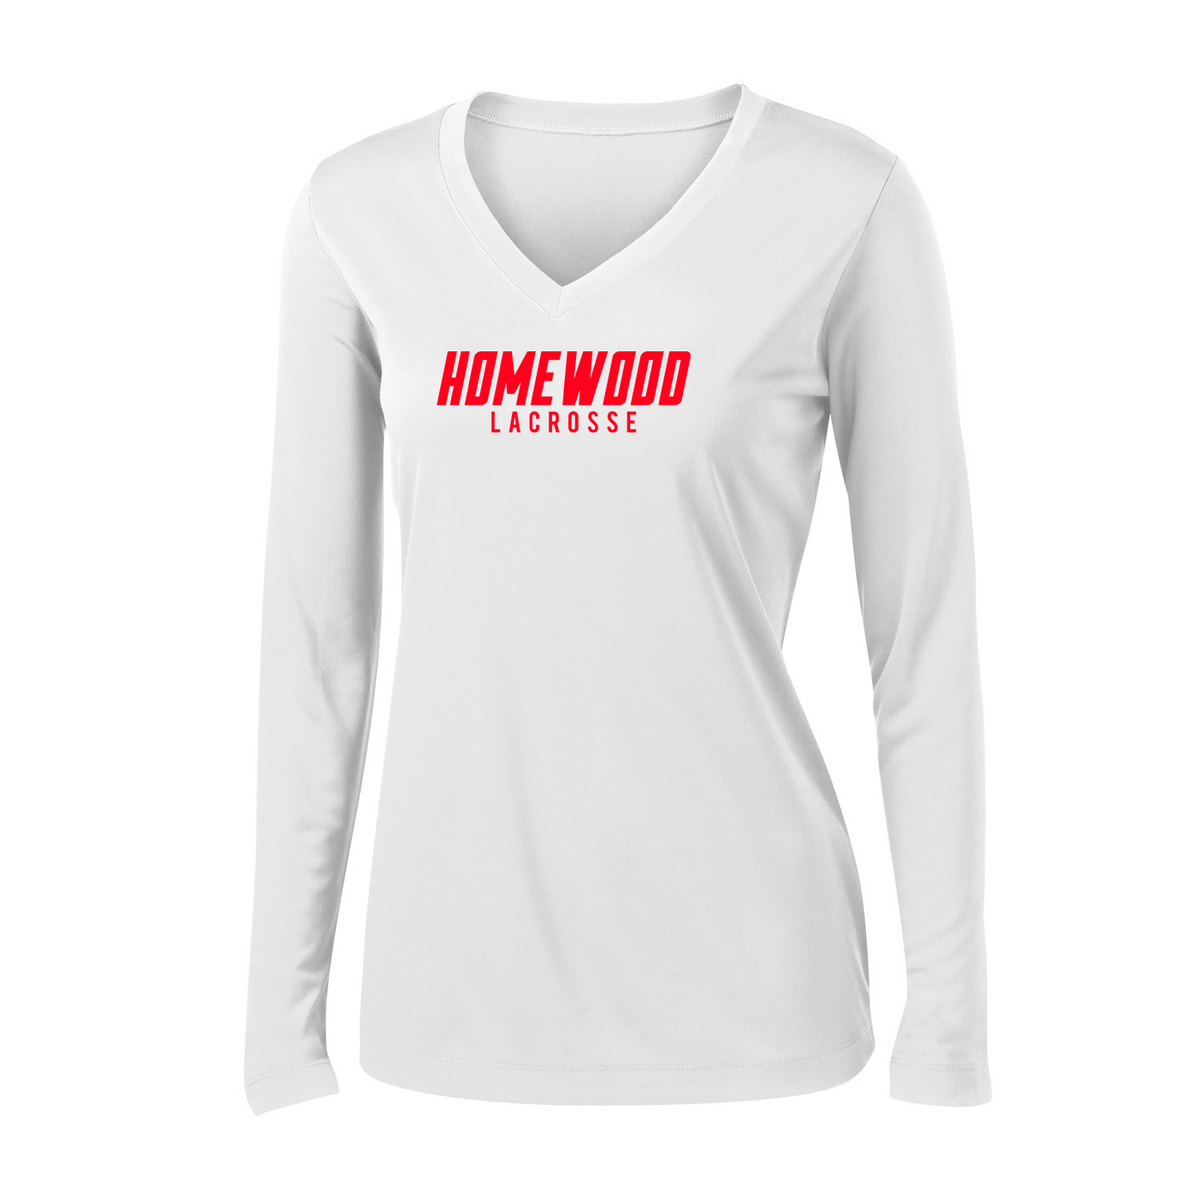 Homewood Lacrosse Women's Long Sleeve Performance Shirt